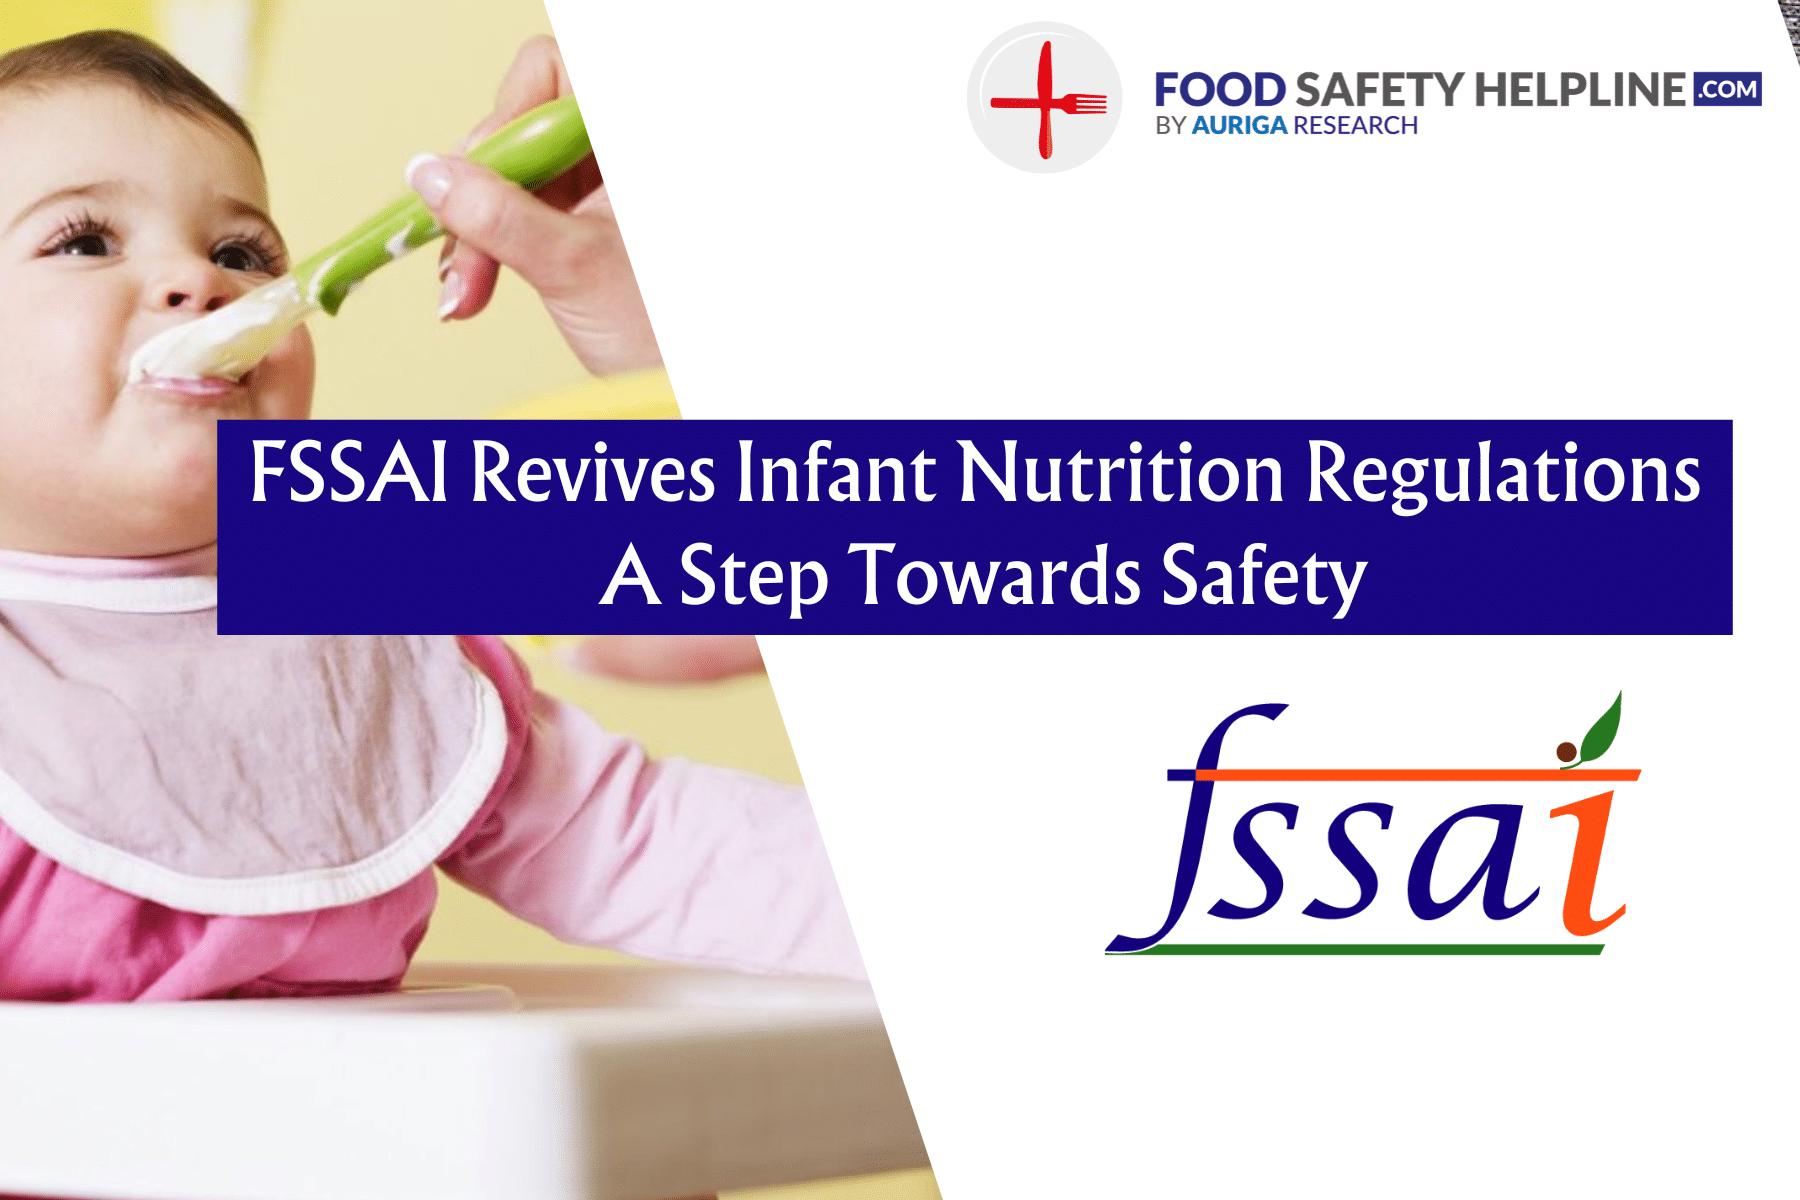 FSSAI Revives Infant Nutrition Regulations: A Step Towards Safety